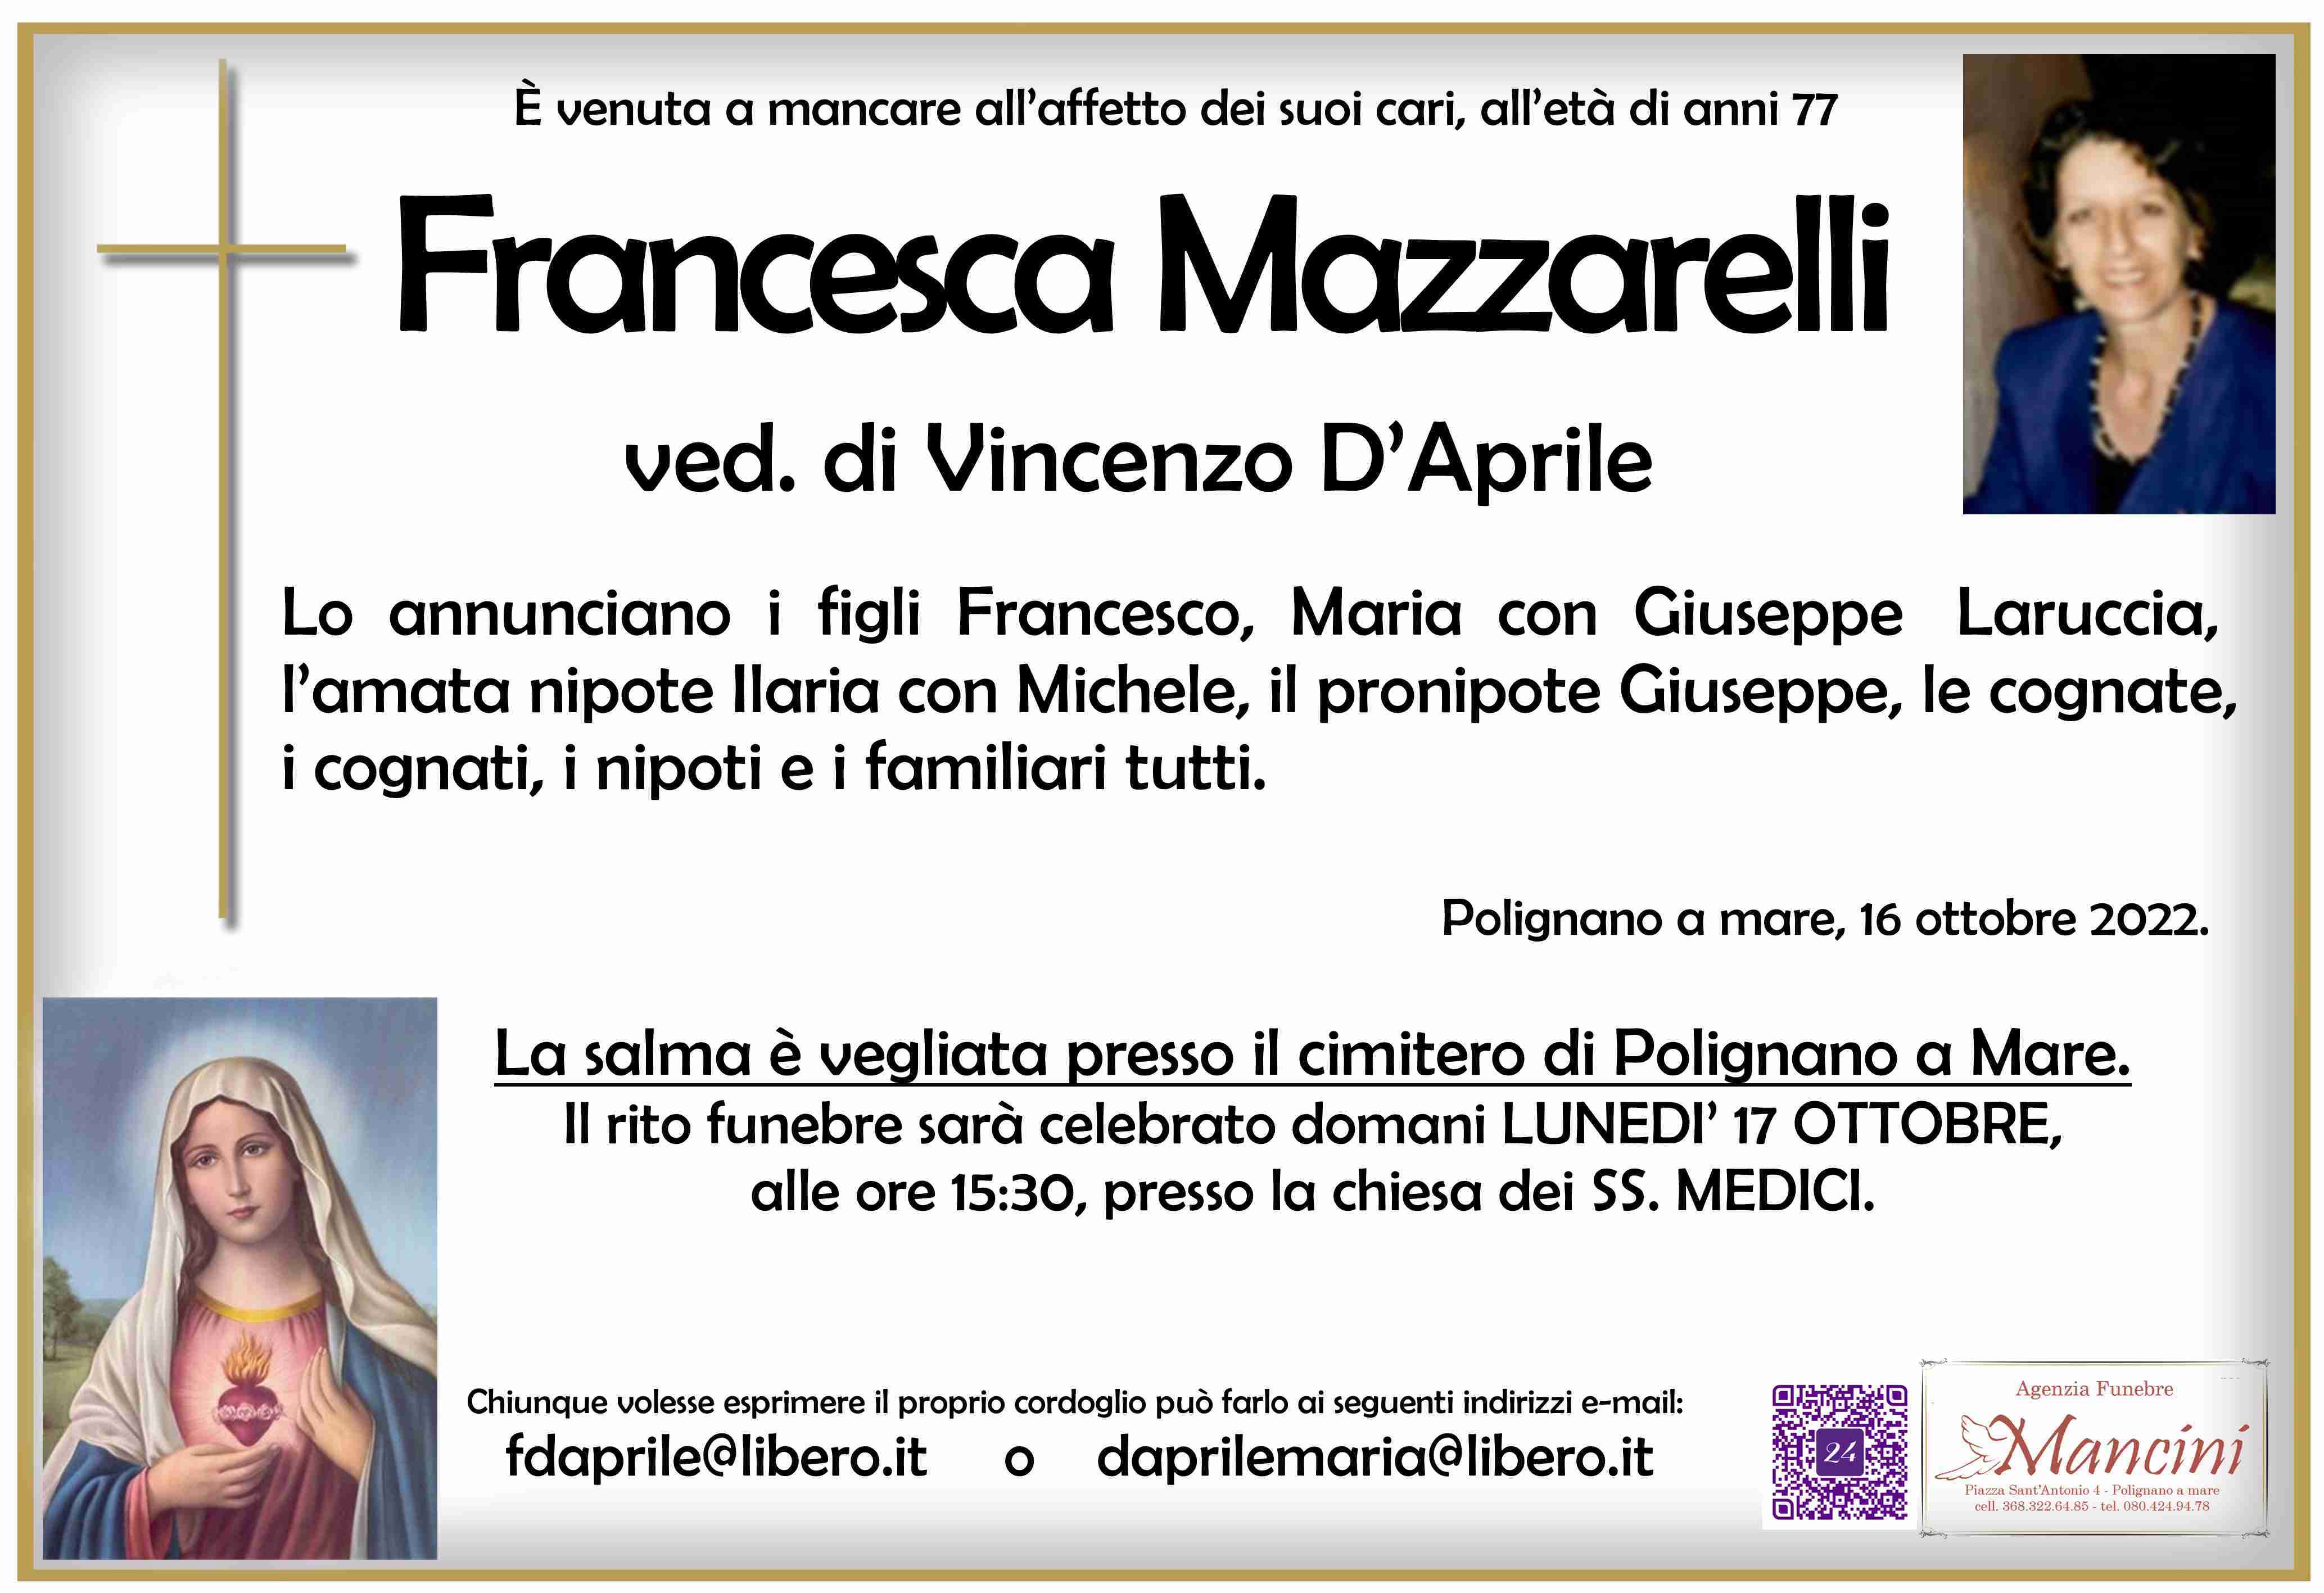 Francesca Mazzarelli